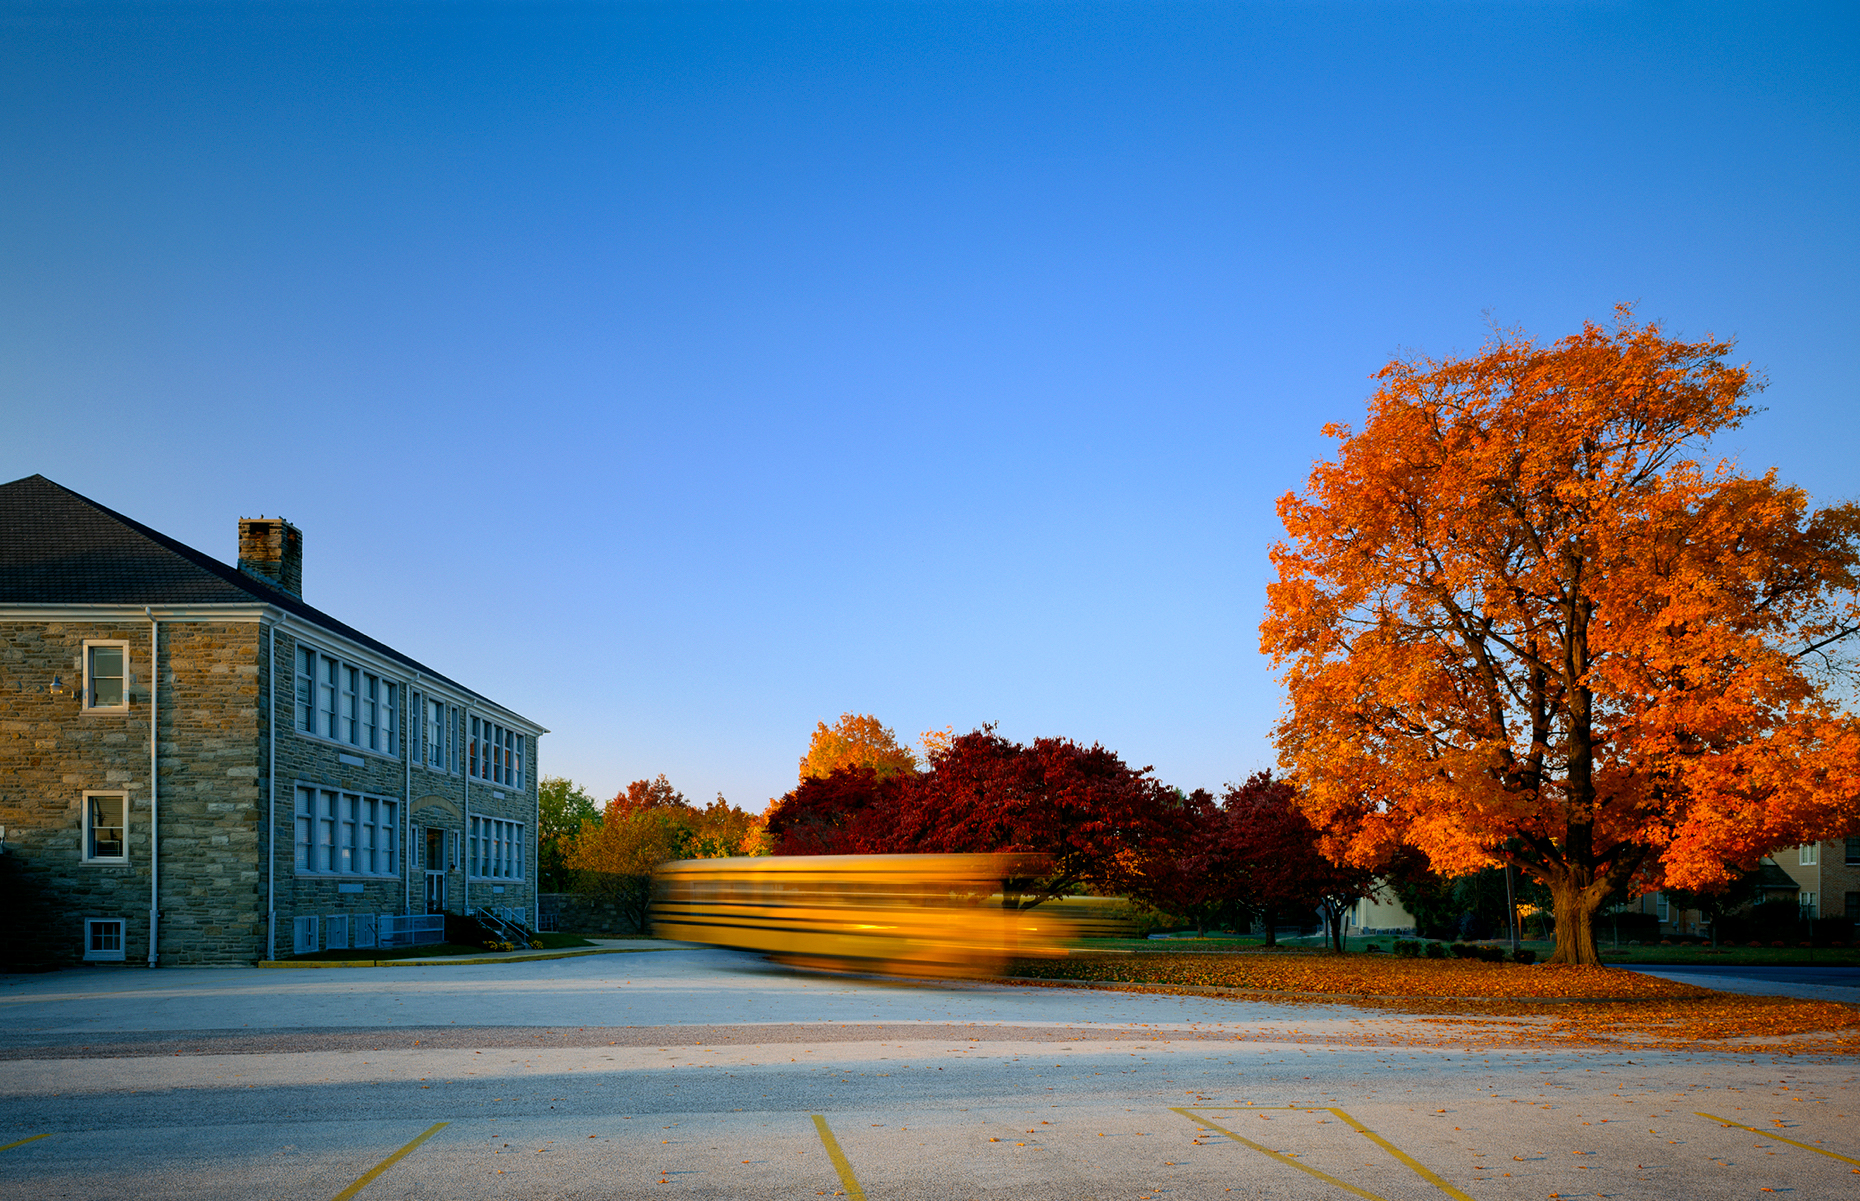 School bus goes by an elementary school in a blur of motion.  A large oak tree is in full autumn foliage.